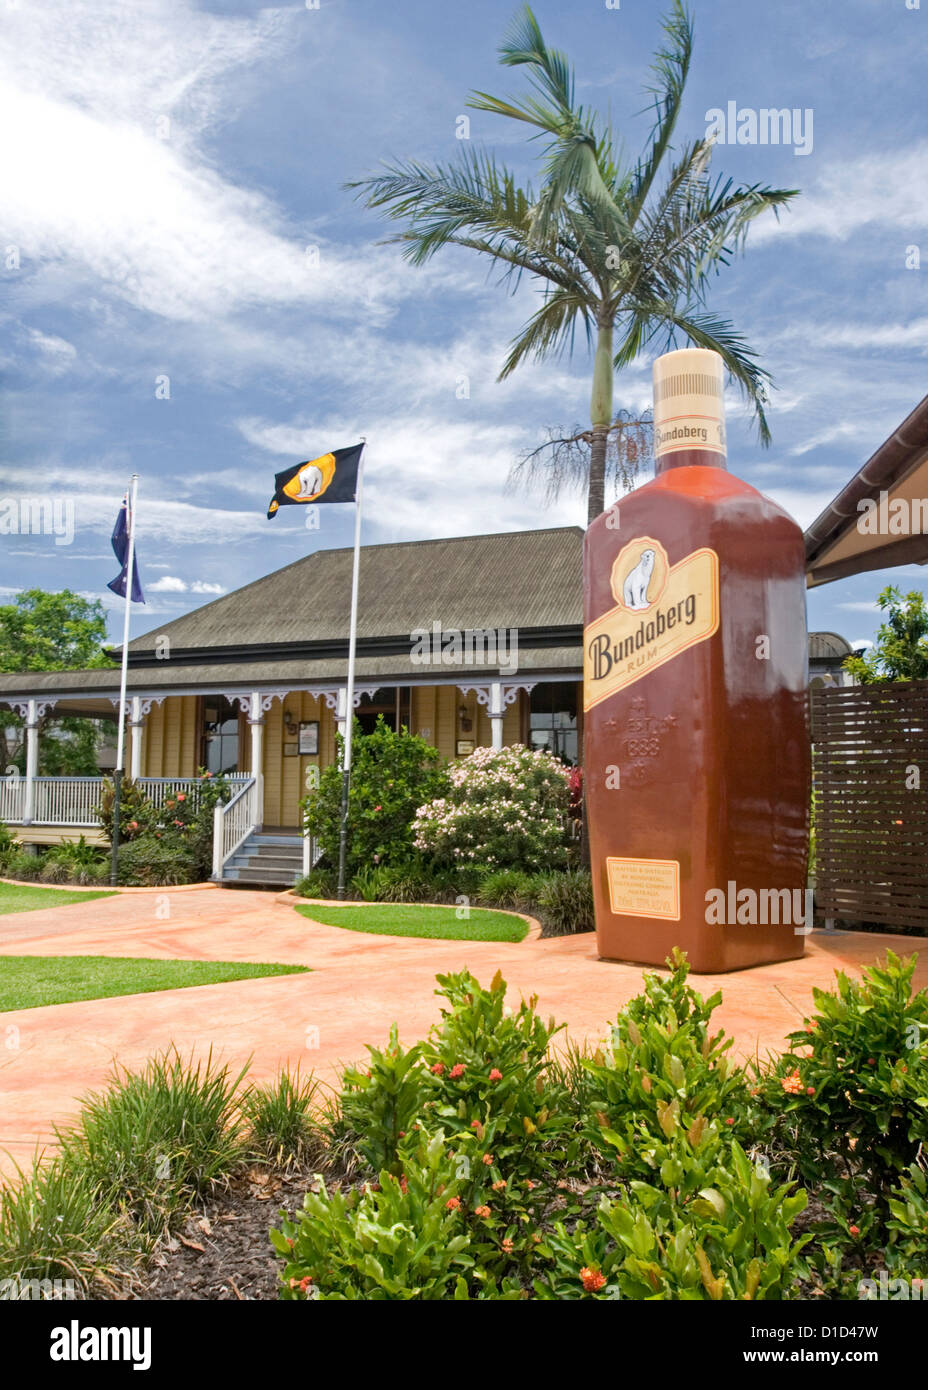 Gigantic bottle of rum and historic cottage at entrance to Bundaberg Rum Distillery Stock Photo